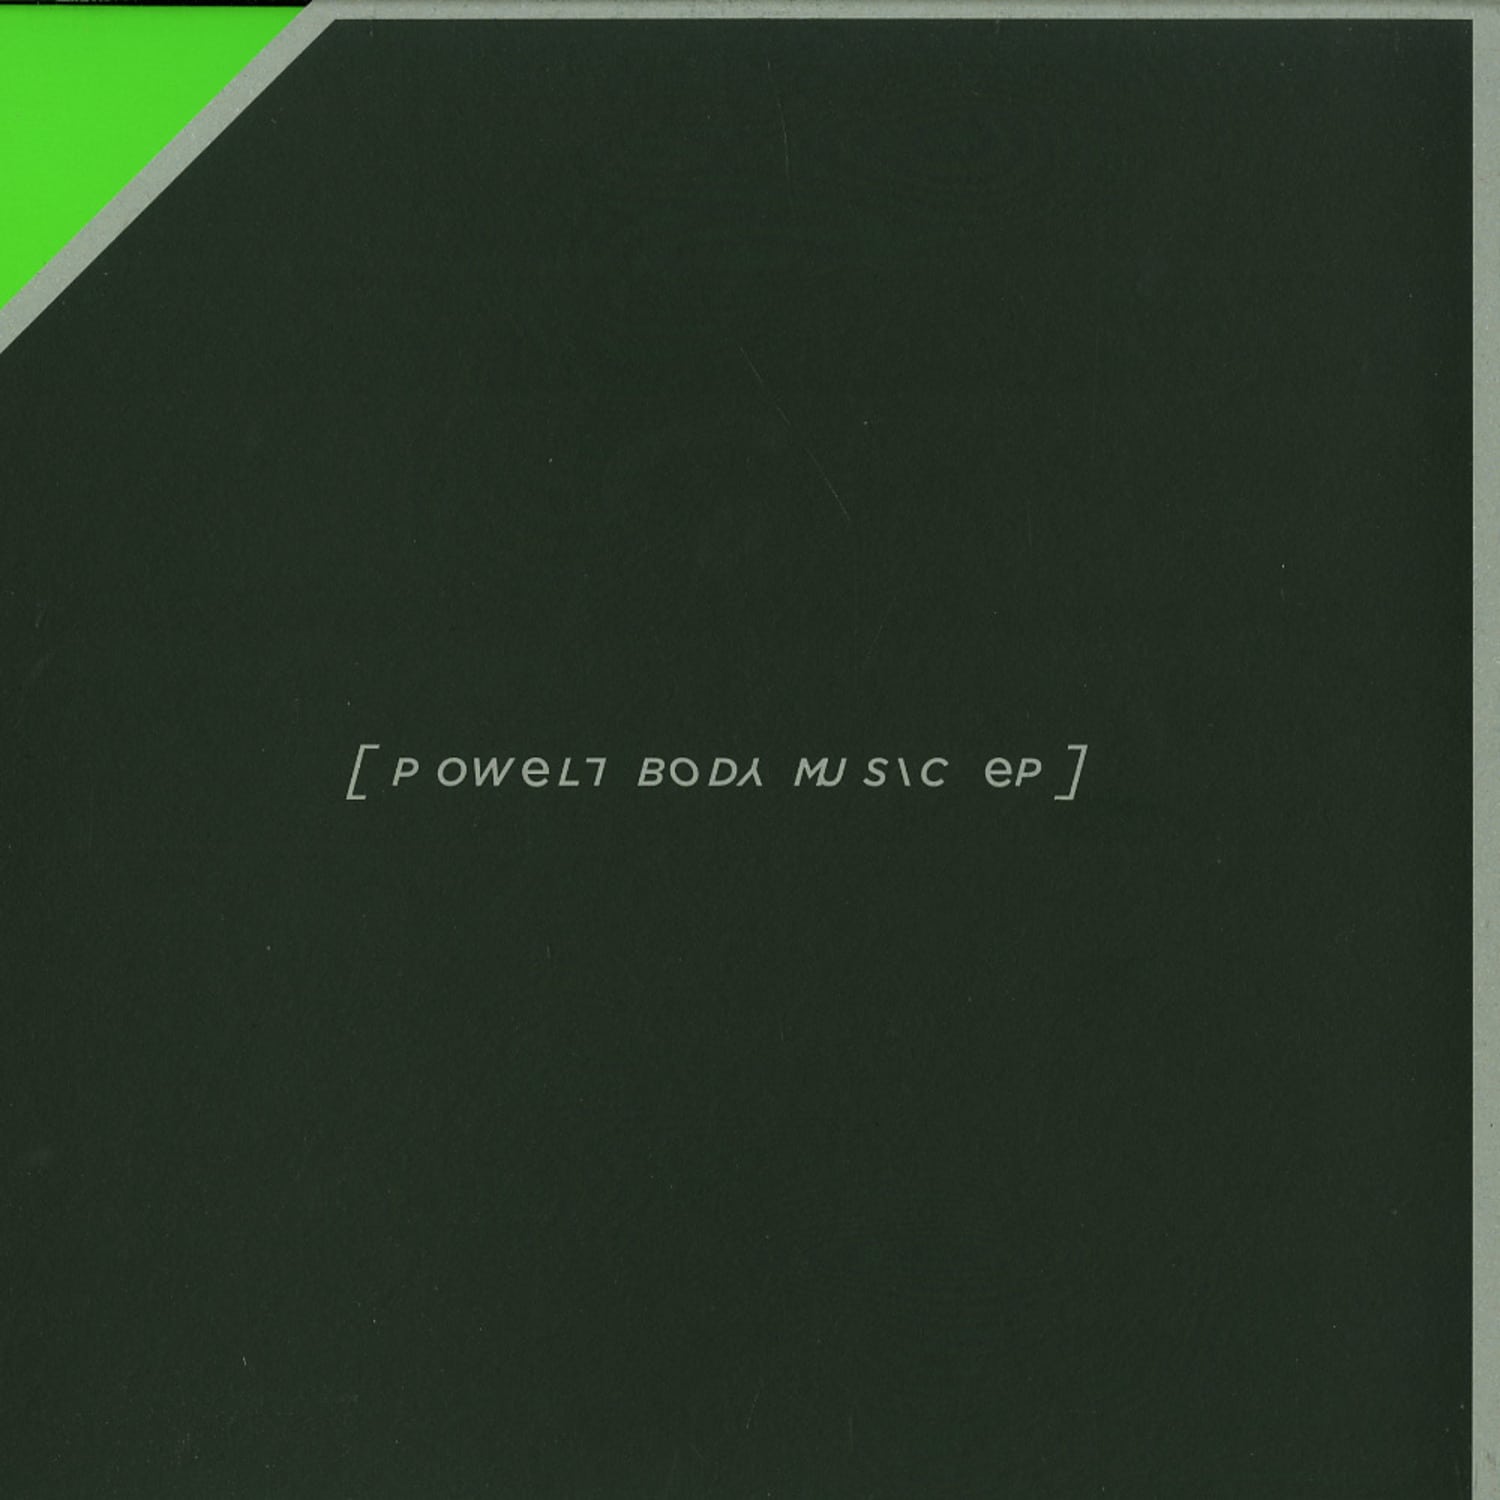 Powell - BODY MUSIC EP